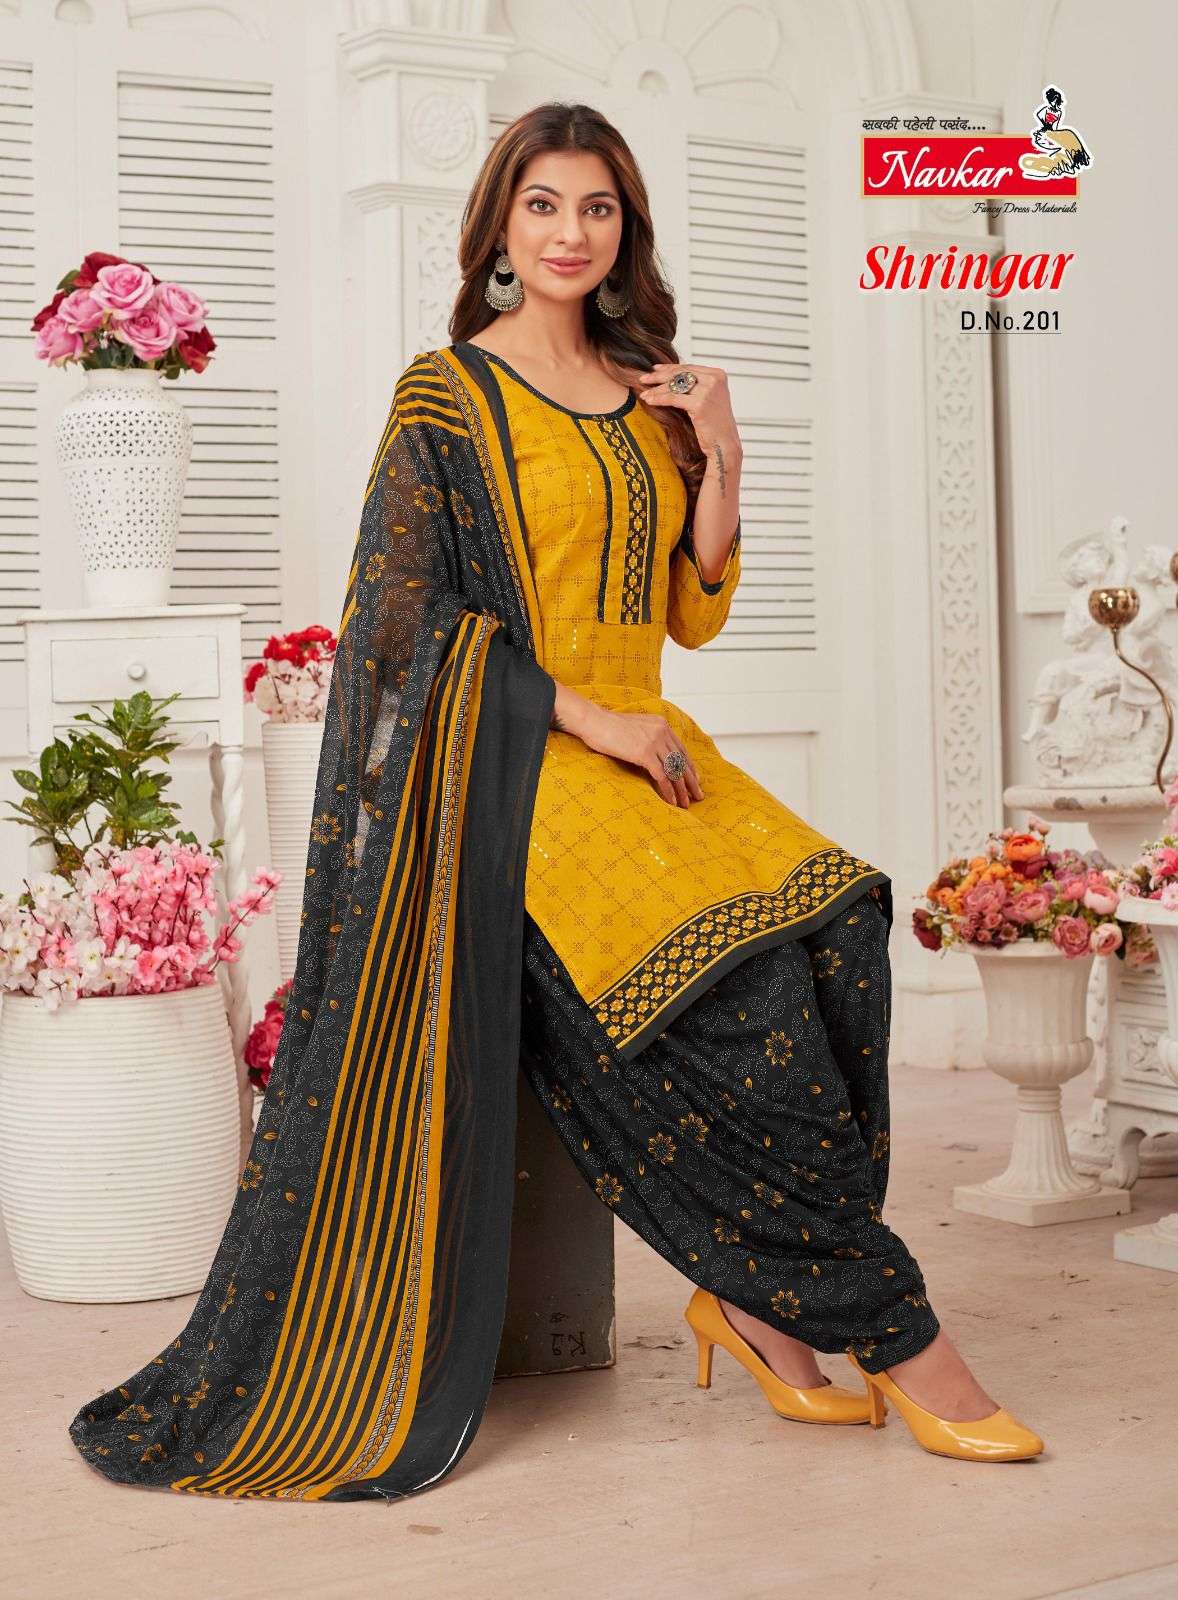 navkar shringar vol-2 201-216 series trendy designer salwar suits catalogue online supplier surat